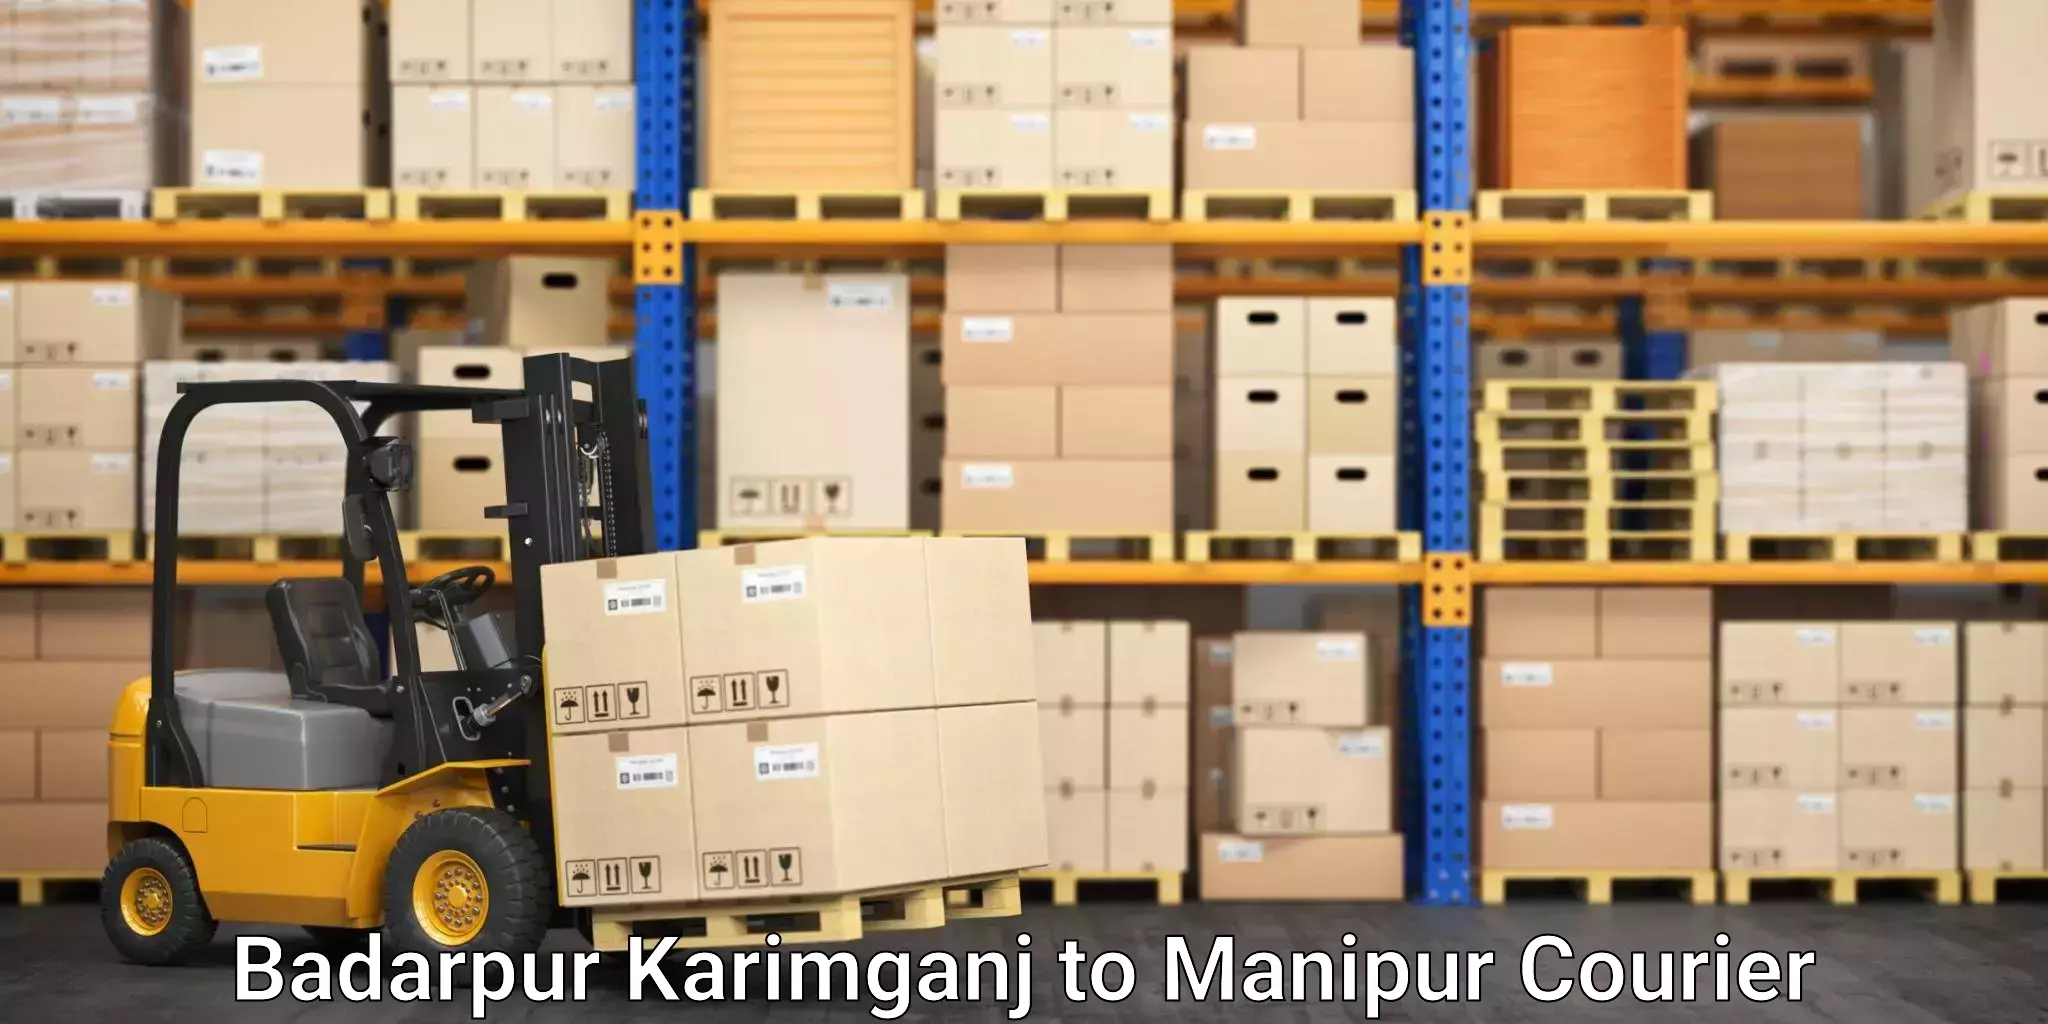 On-demand courier Badarpur Karimganj to Chandel